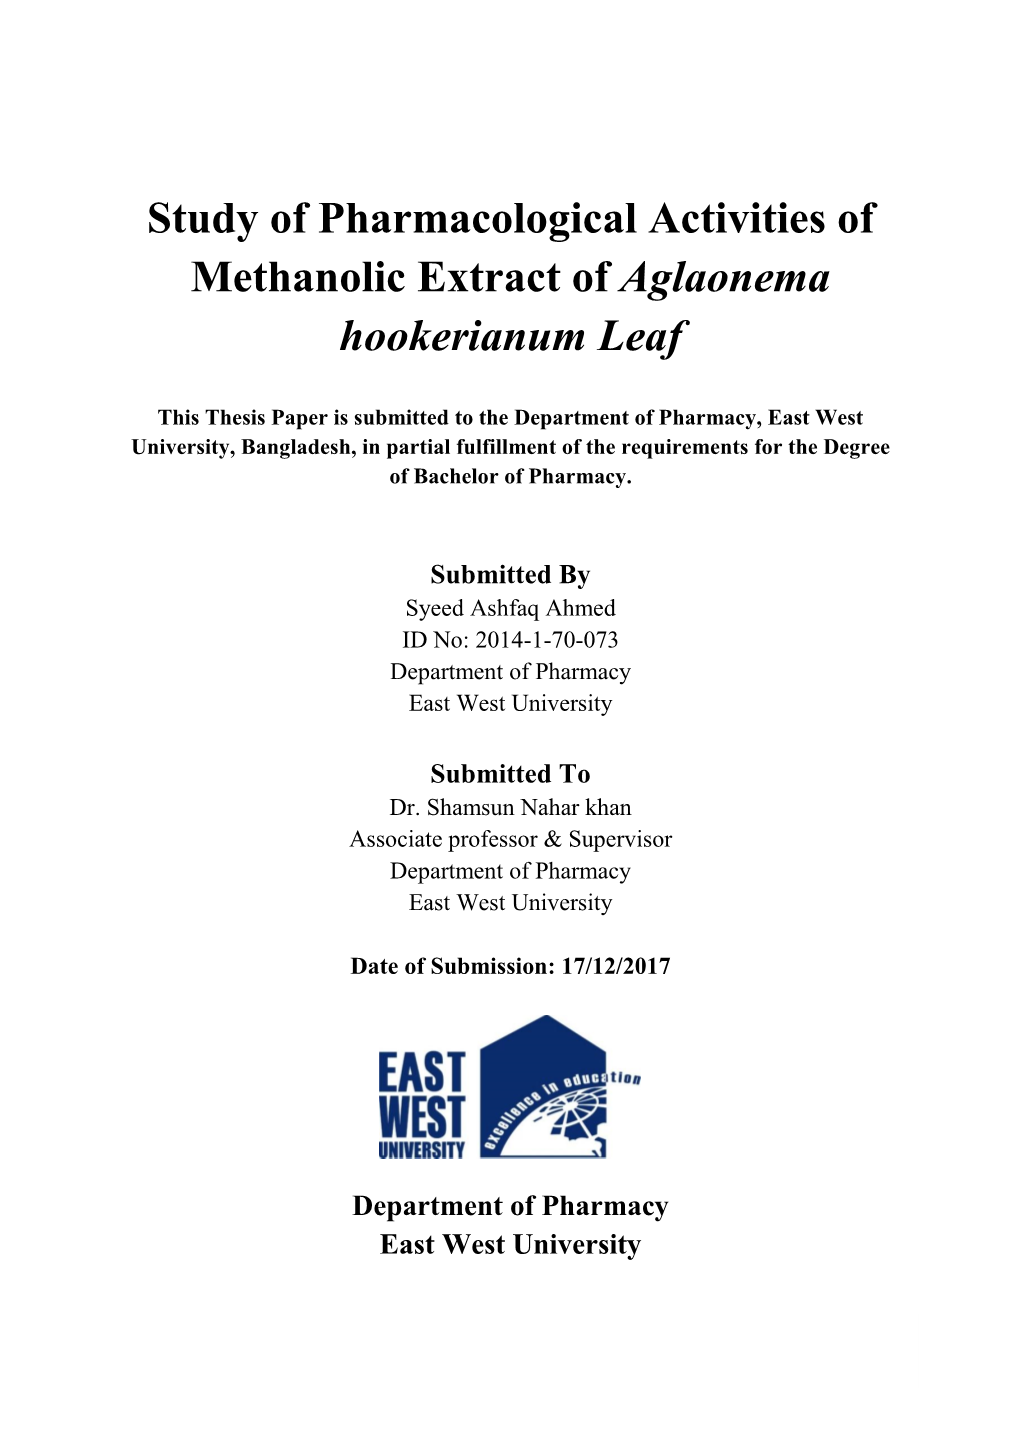 Study of Pharmacological Activities of Methanolic Extract of Aglaonema Hookerianum Leaf